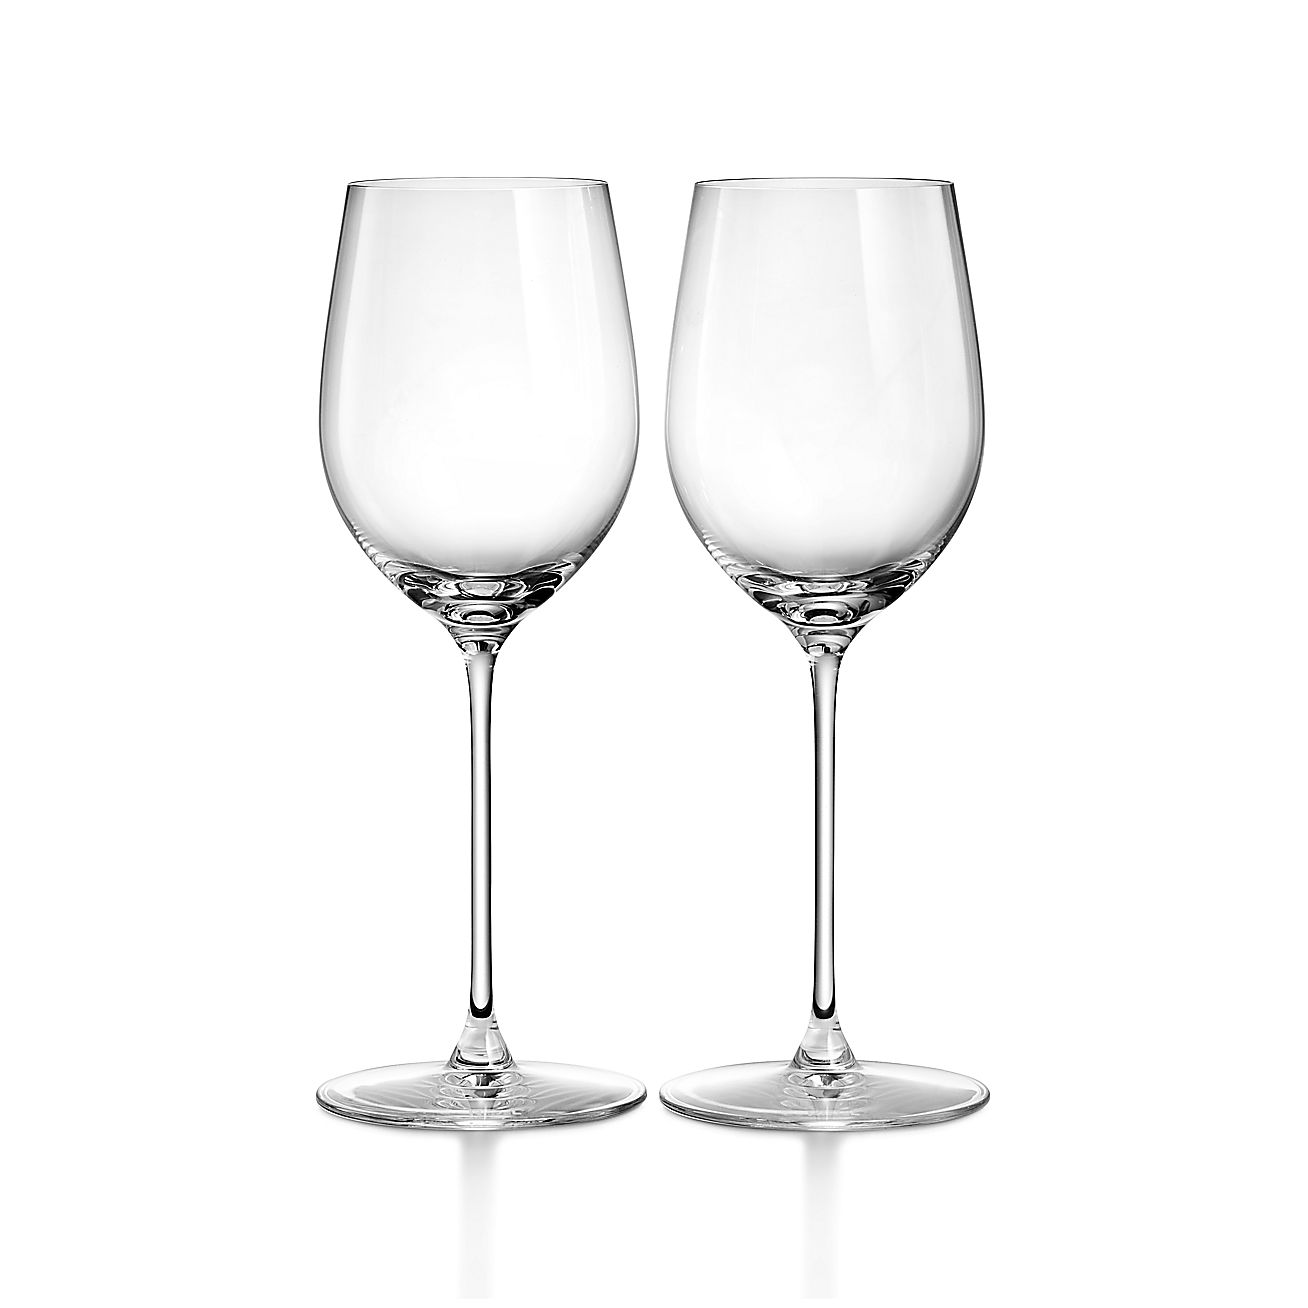 https://media.tiffany.com/is/image/Tiffany/EcomItemL2/tiffany-home-essentialswhite-wine-glasses-73480396_1062587_ED.jpg?&op_usm=2.0,1.0,6.0&$cropN=0.1,0.1,0.8,0.8&defaultImage=NoImageAvailableInternal&